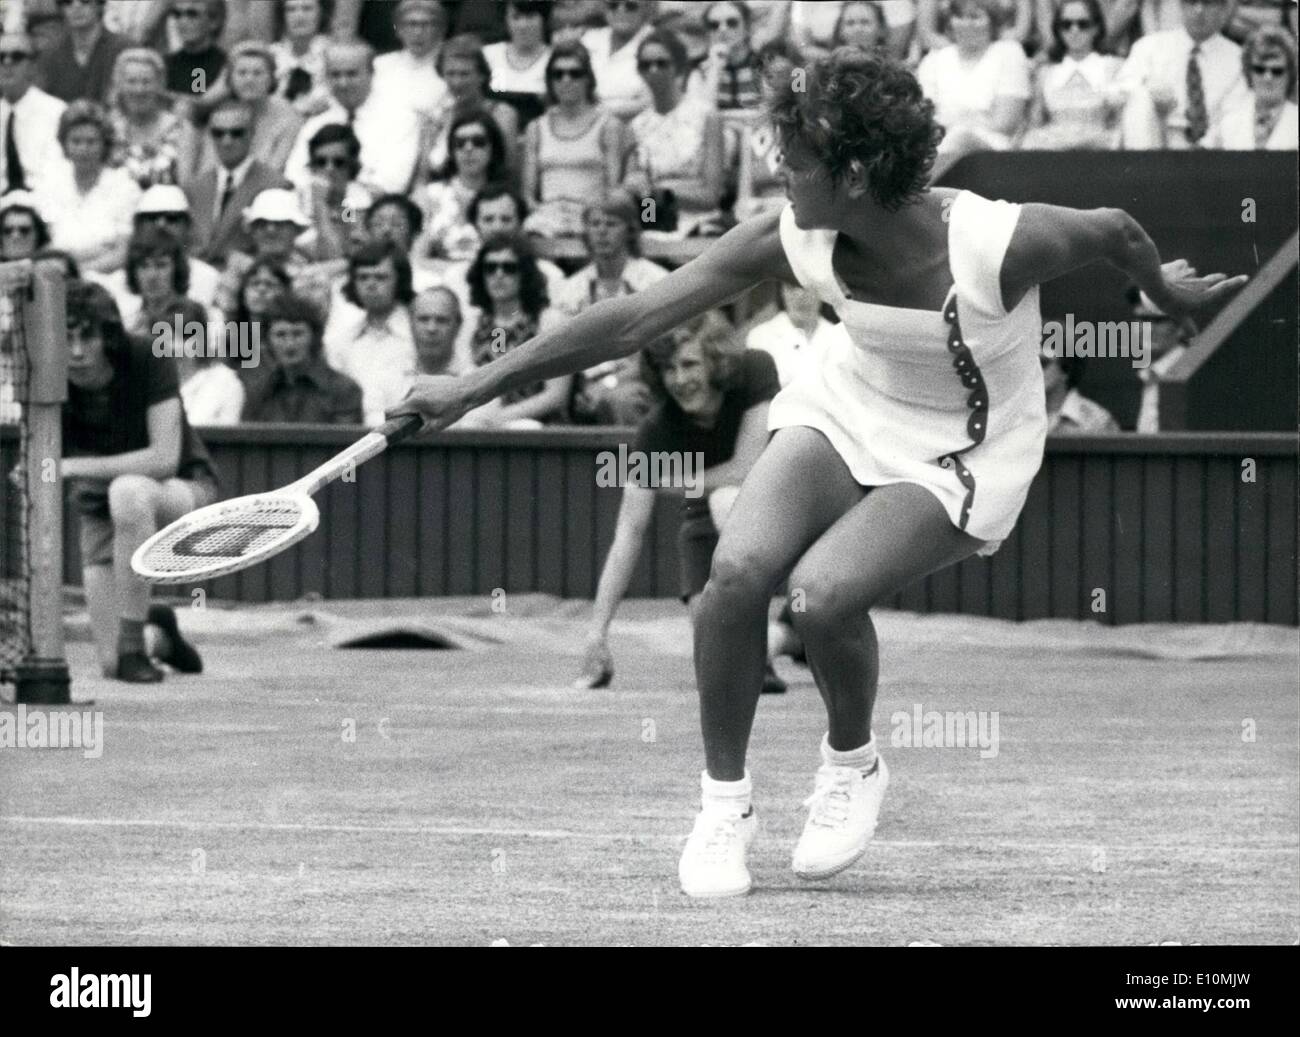 Lug. 22, 1973 - 22 luglio 1973 il tennis a Wimbledon. Evonne Goolagong batte Virginia Wade Ã¢â'¬â€oe foto mostra: Evonne G Foto Stock